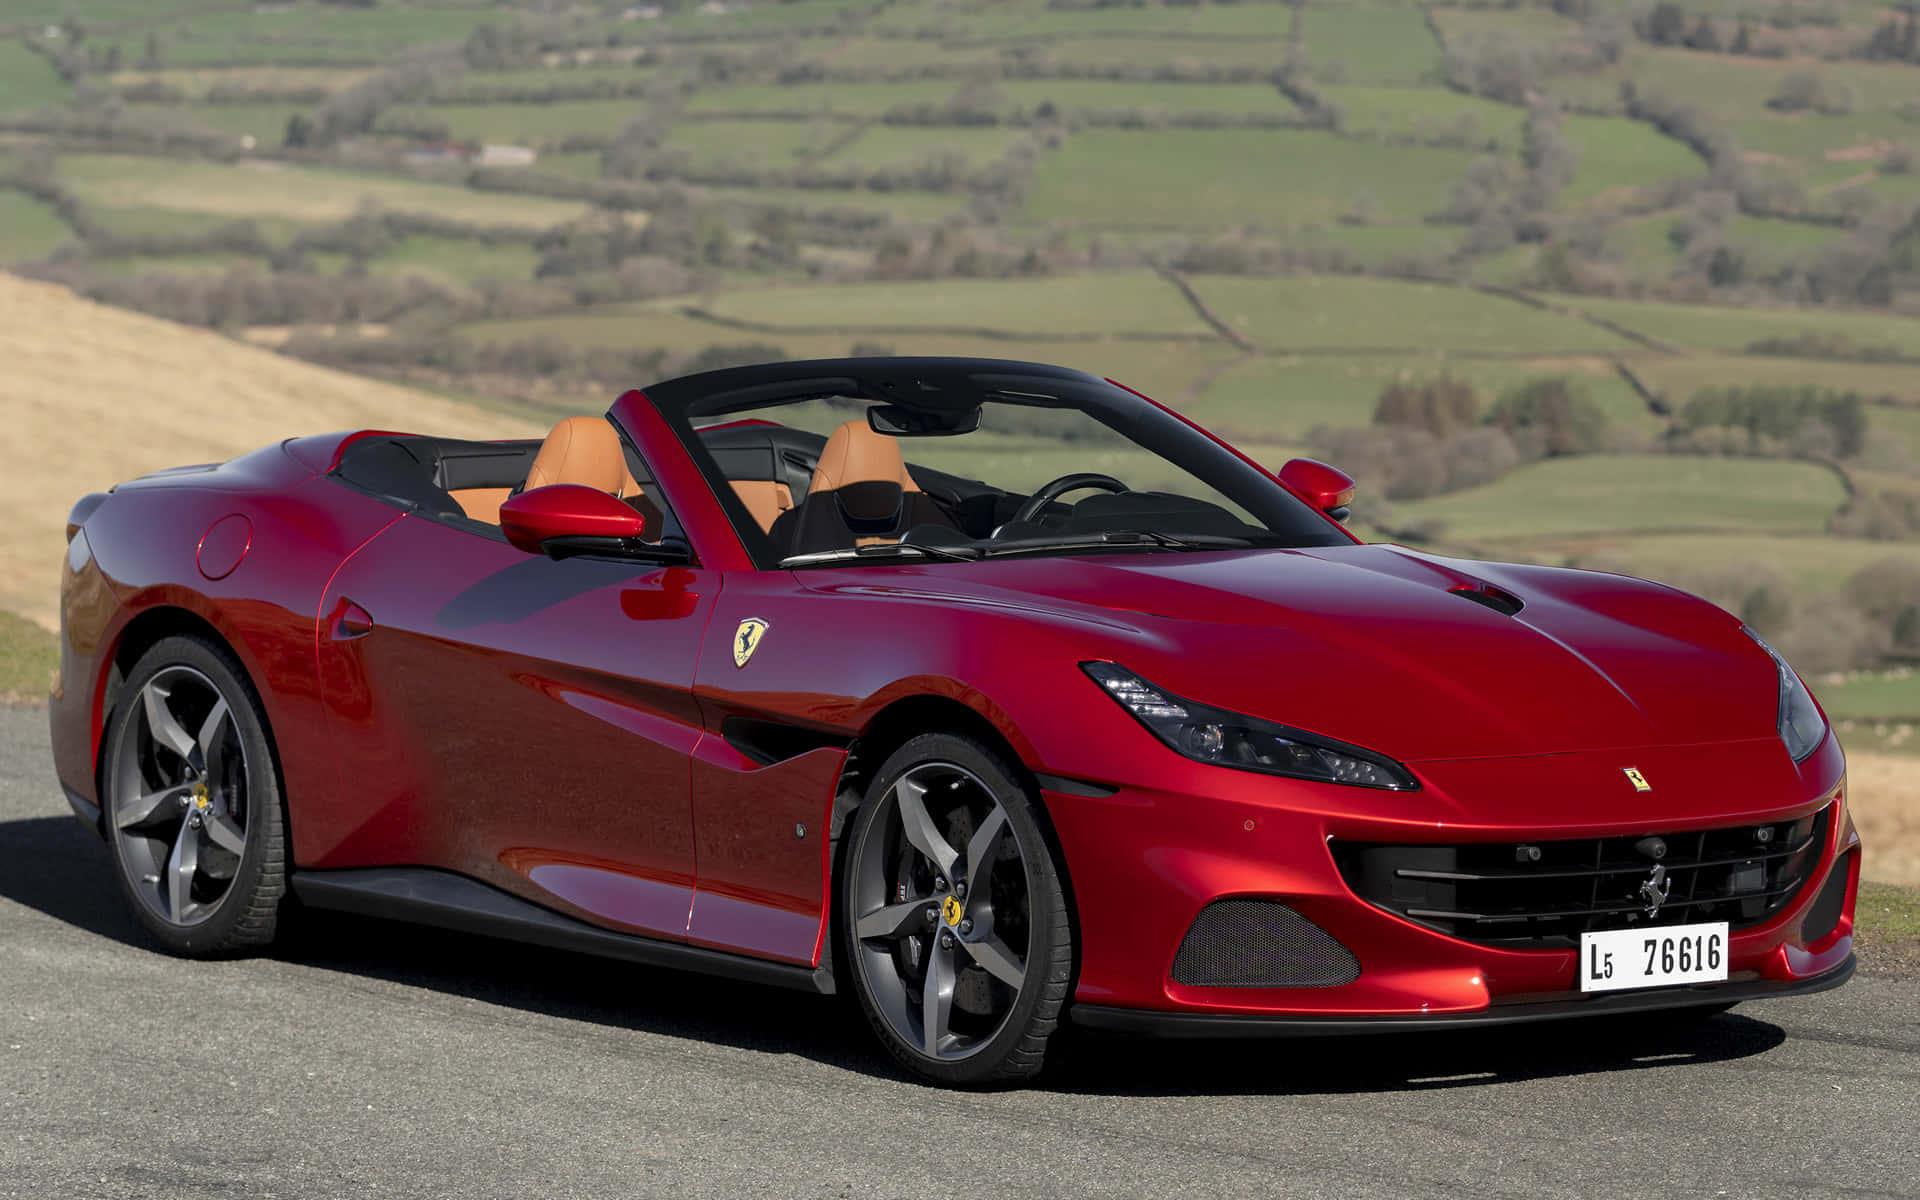 Caption: Unleashed Speed - Ferrari Portofino Wallpaper